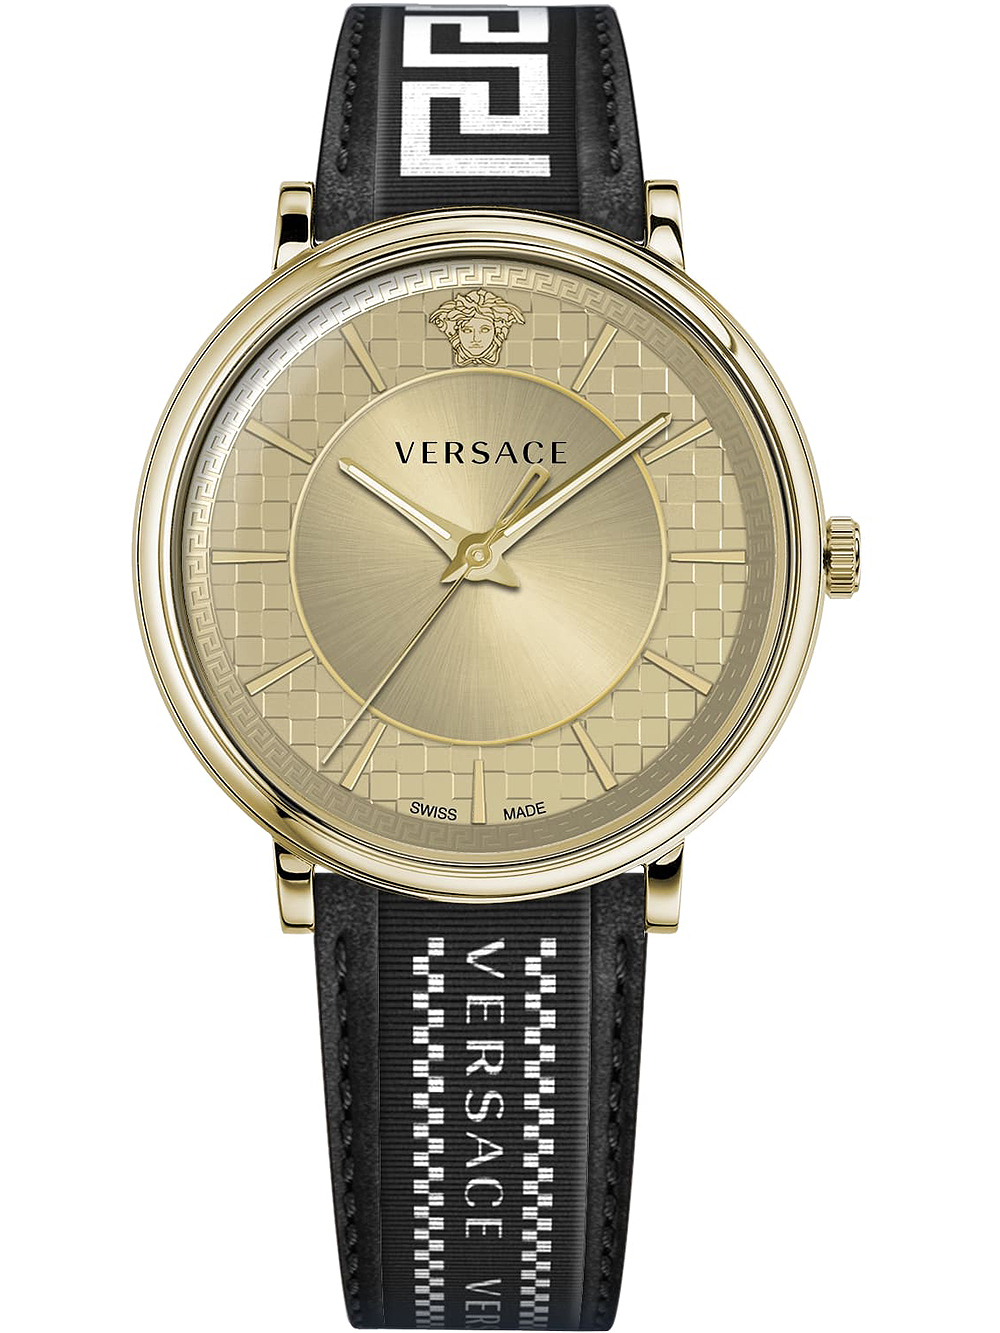 Zegarek męski Versace VE5A02121 V-Circle